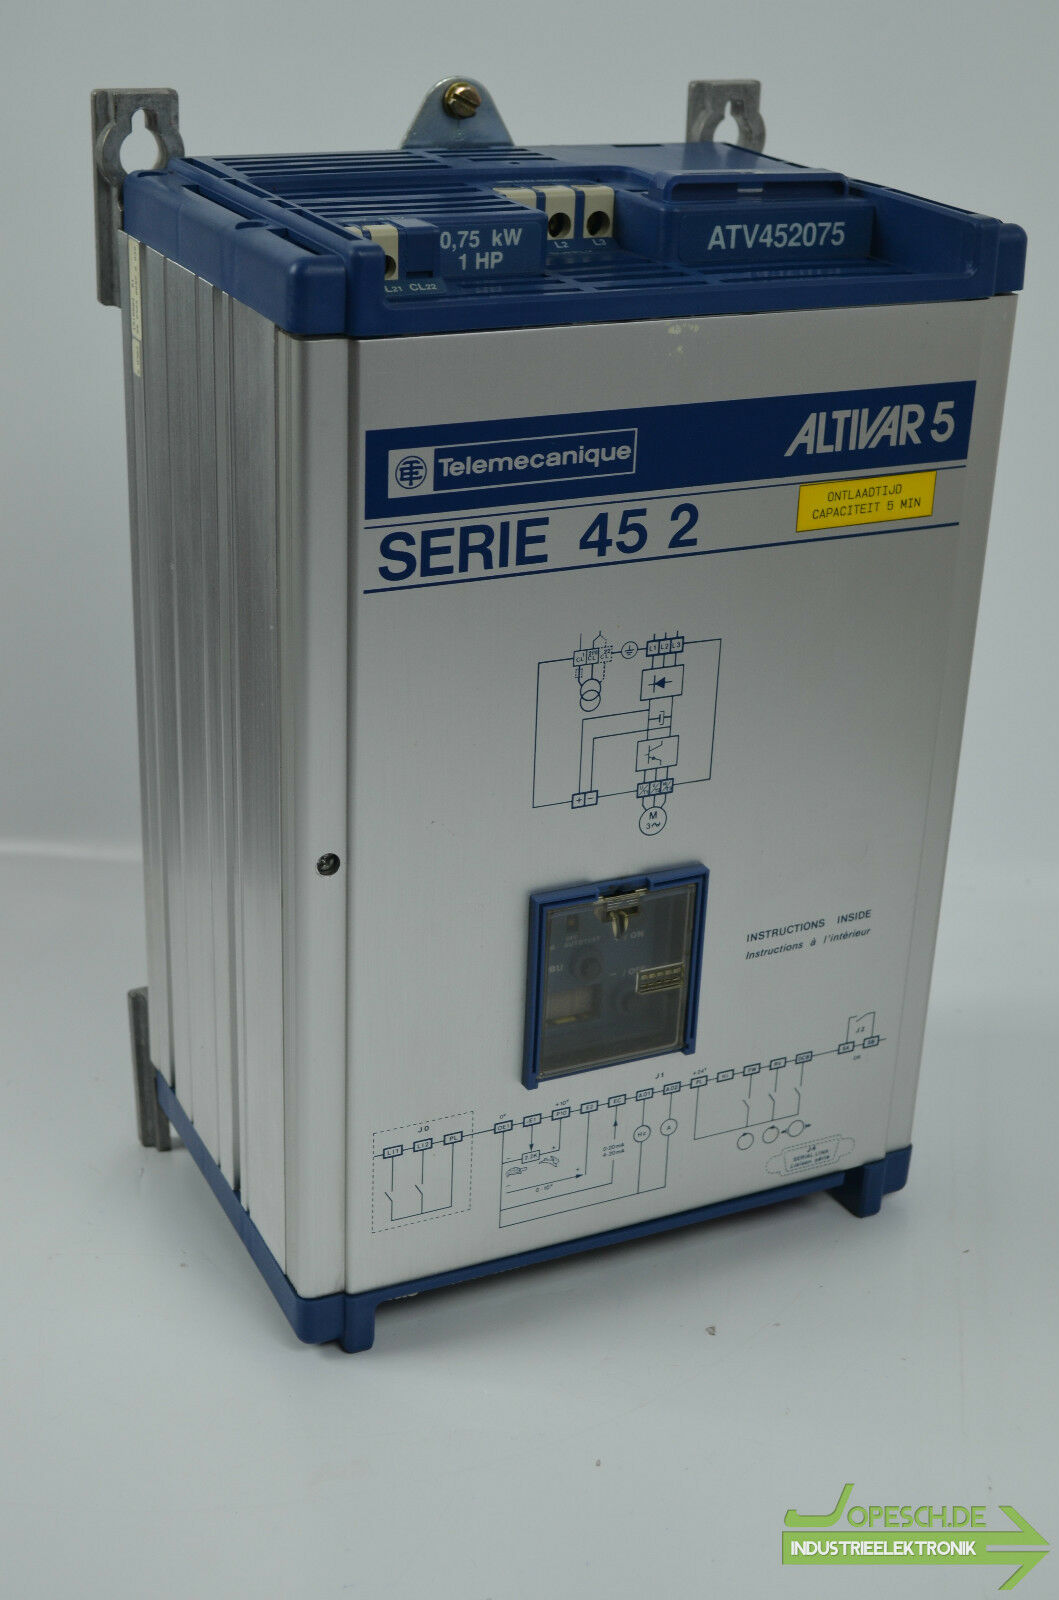 Telemecanique Altivar 5 Serie 45 2 ATV 452075